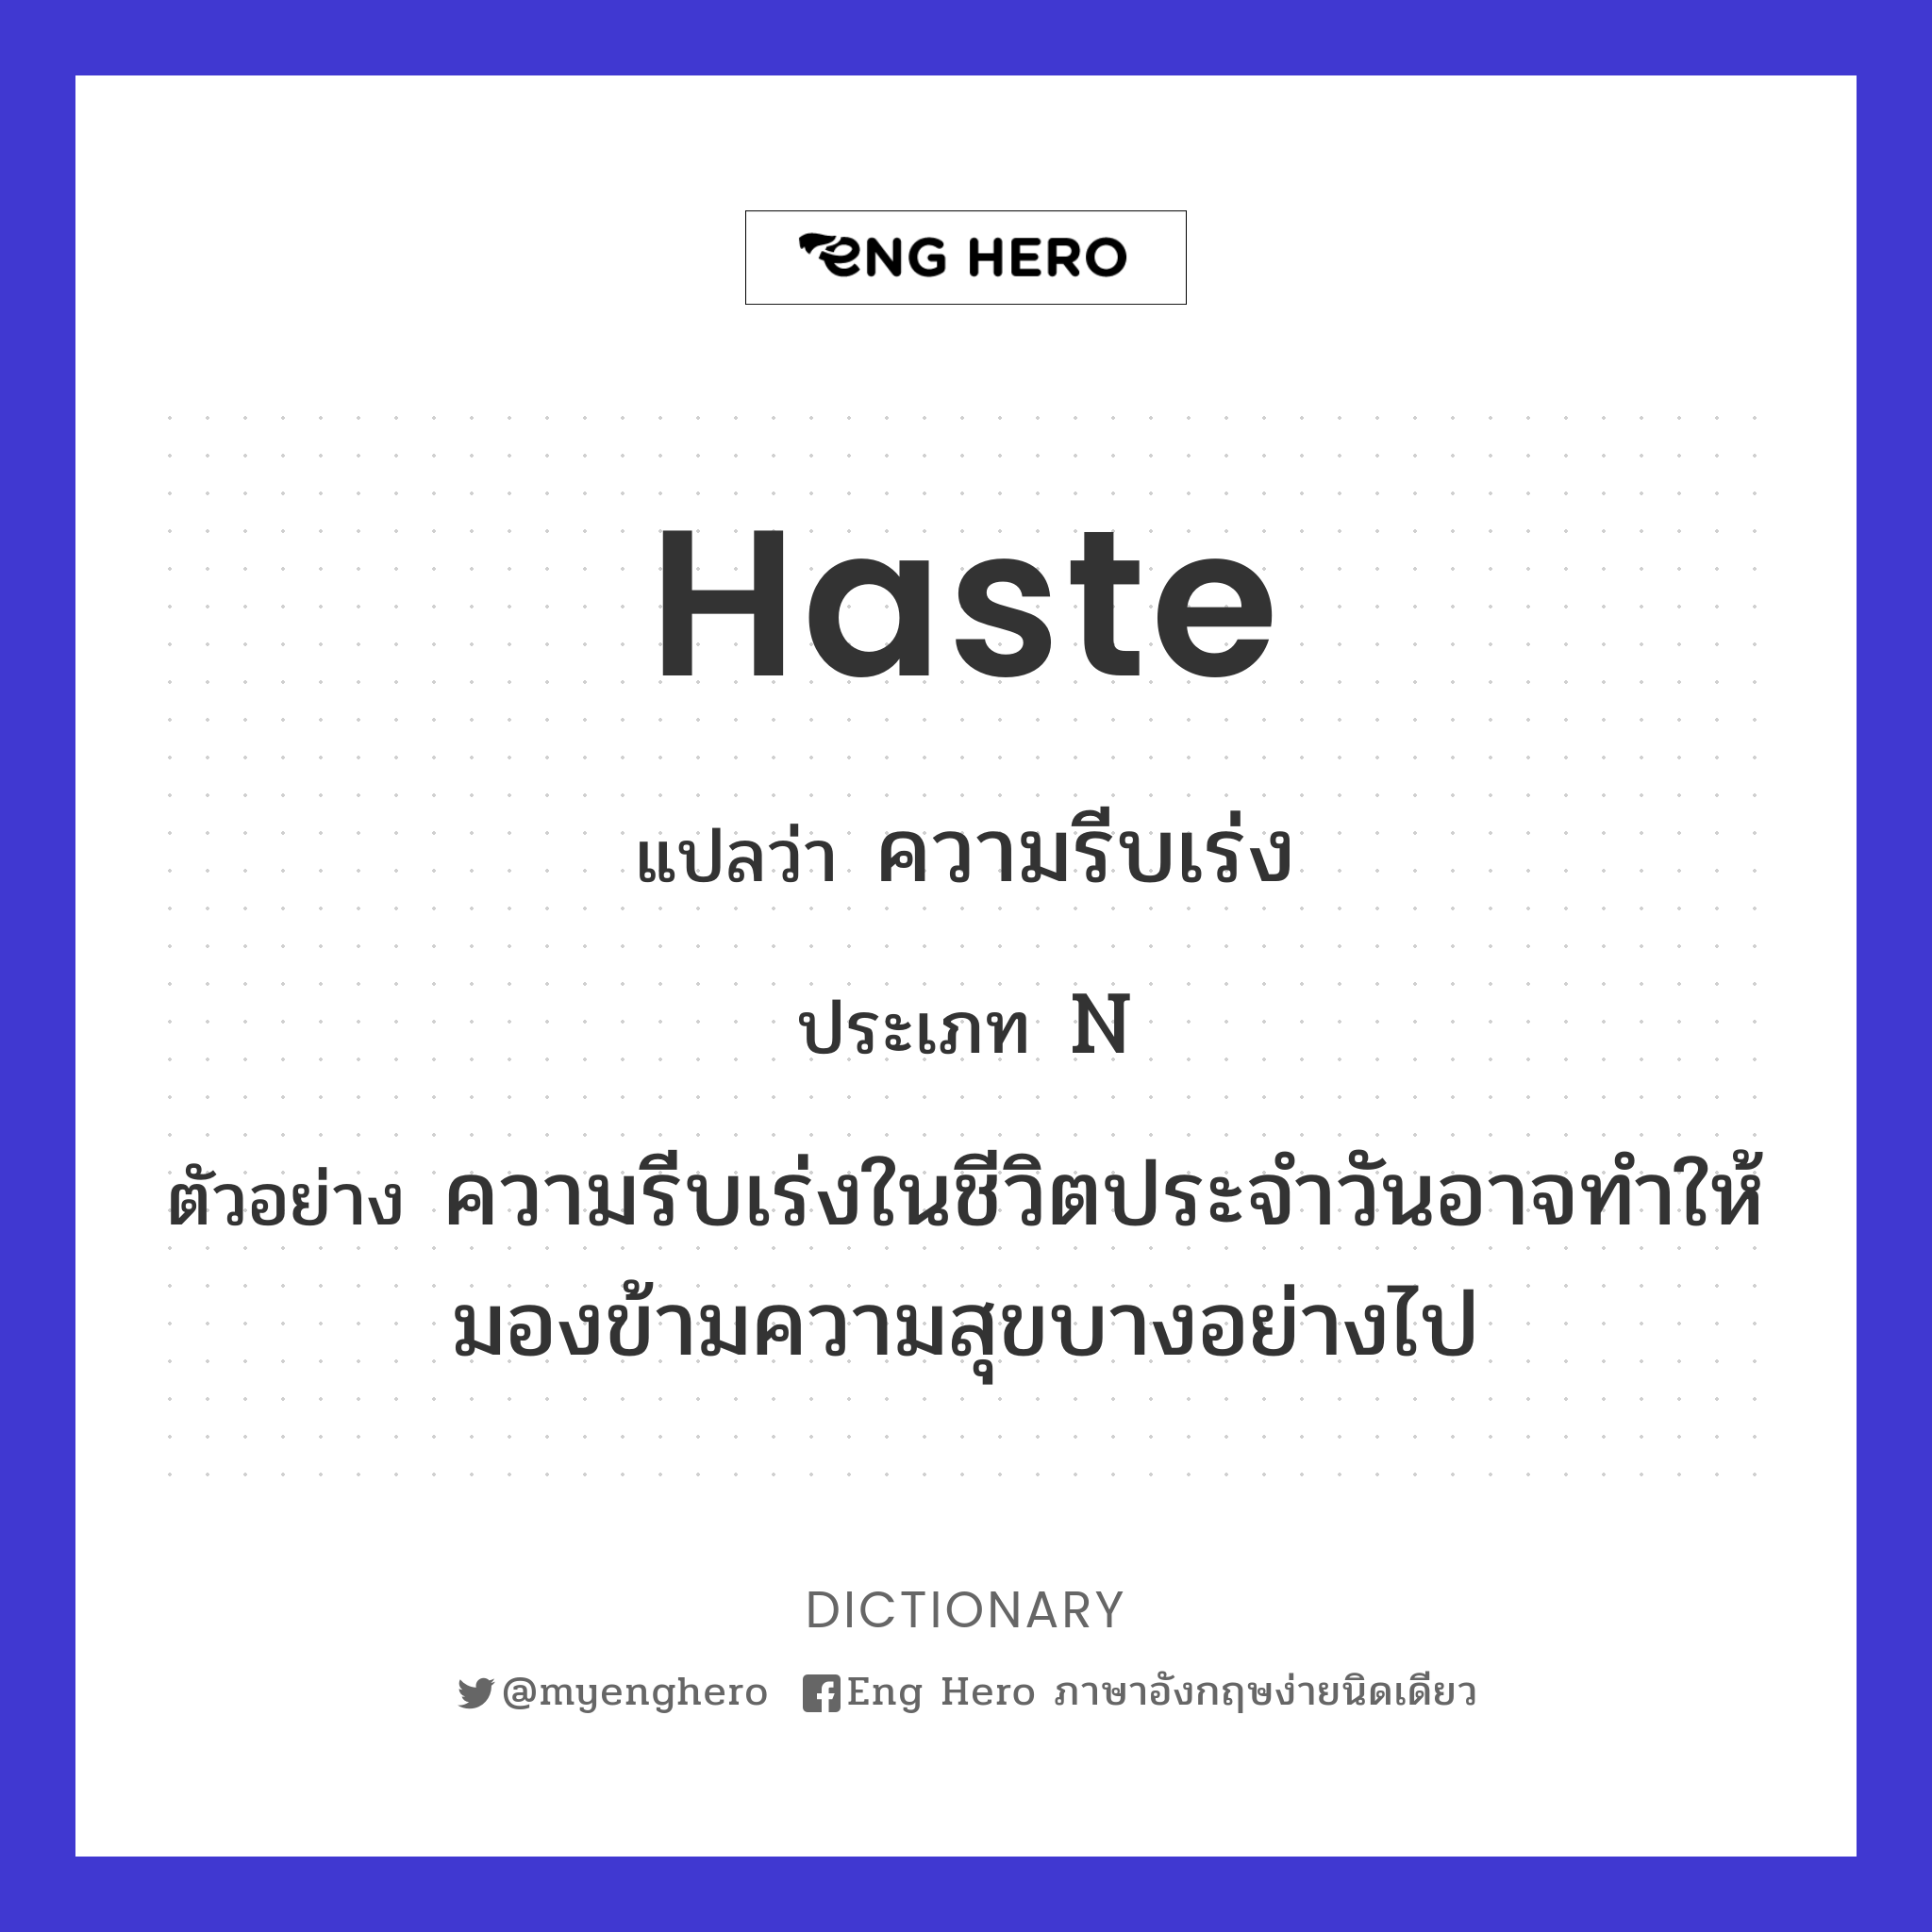 haste